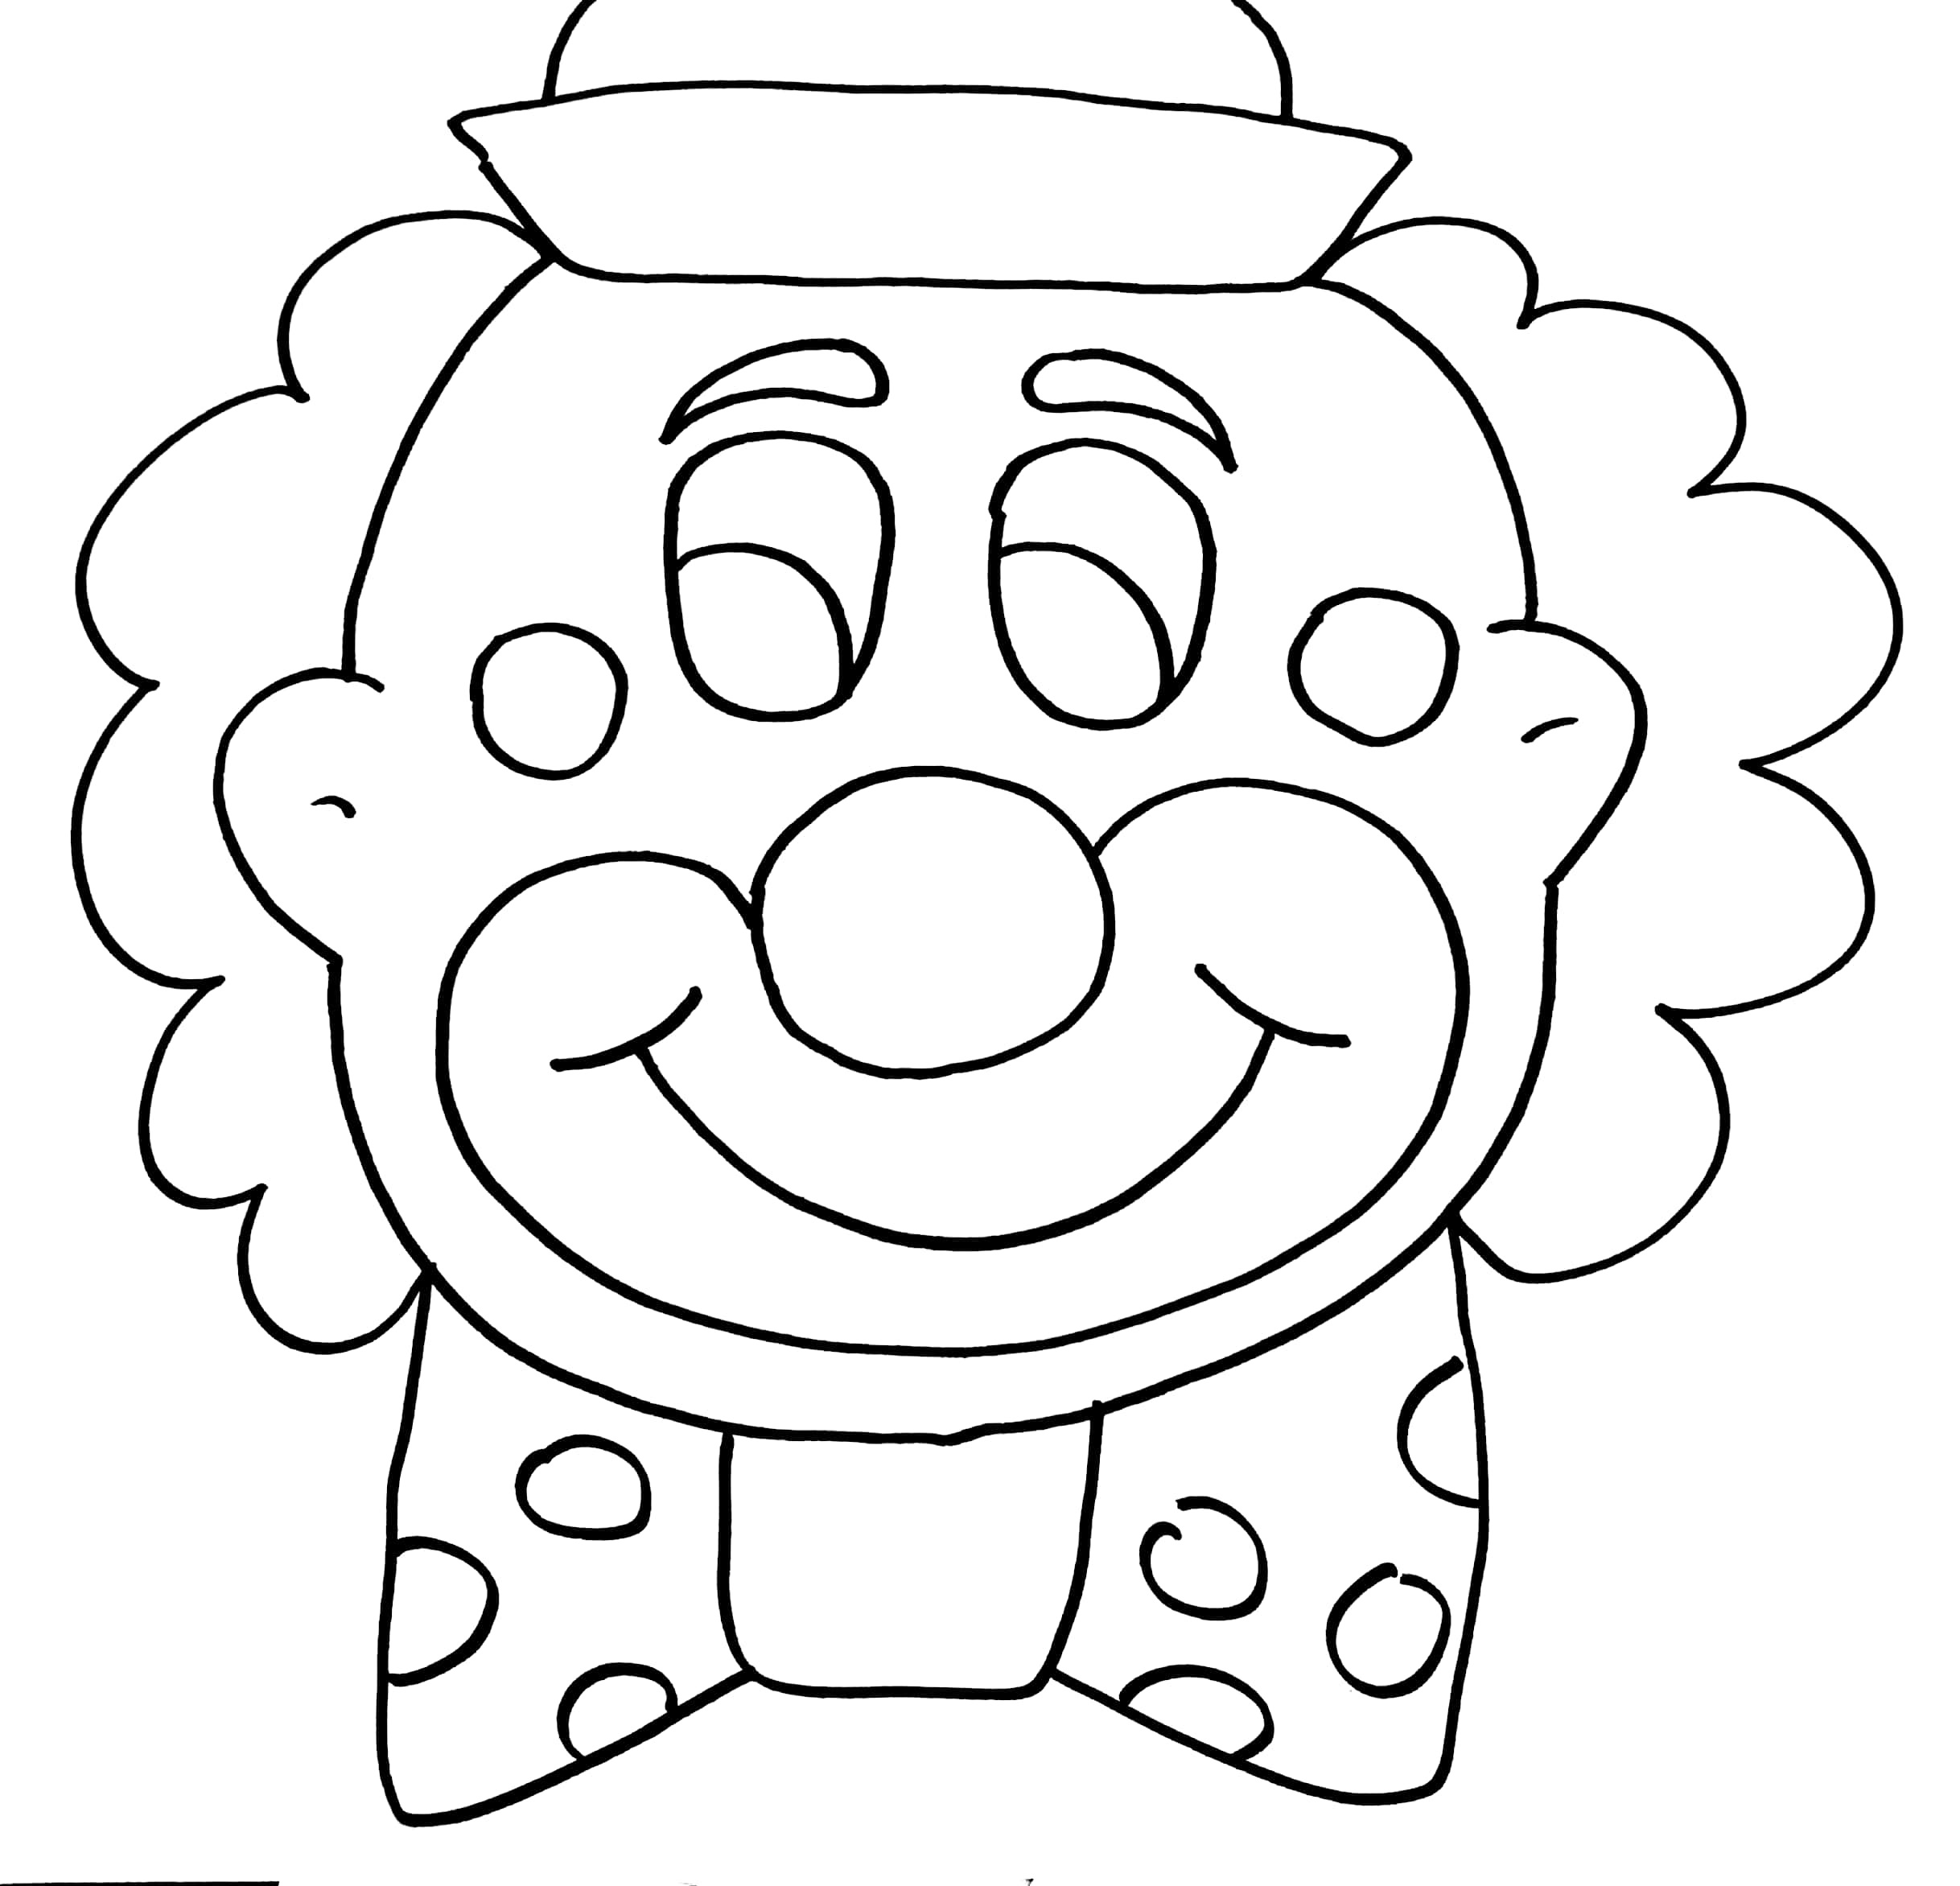 Клоун раскраска для детей 4 5 лет. Клоун раскраска. Клоун раскраска для детей. Лицо клоуна раскраска. Лицо клоуна раскраски для детей.